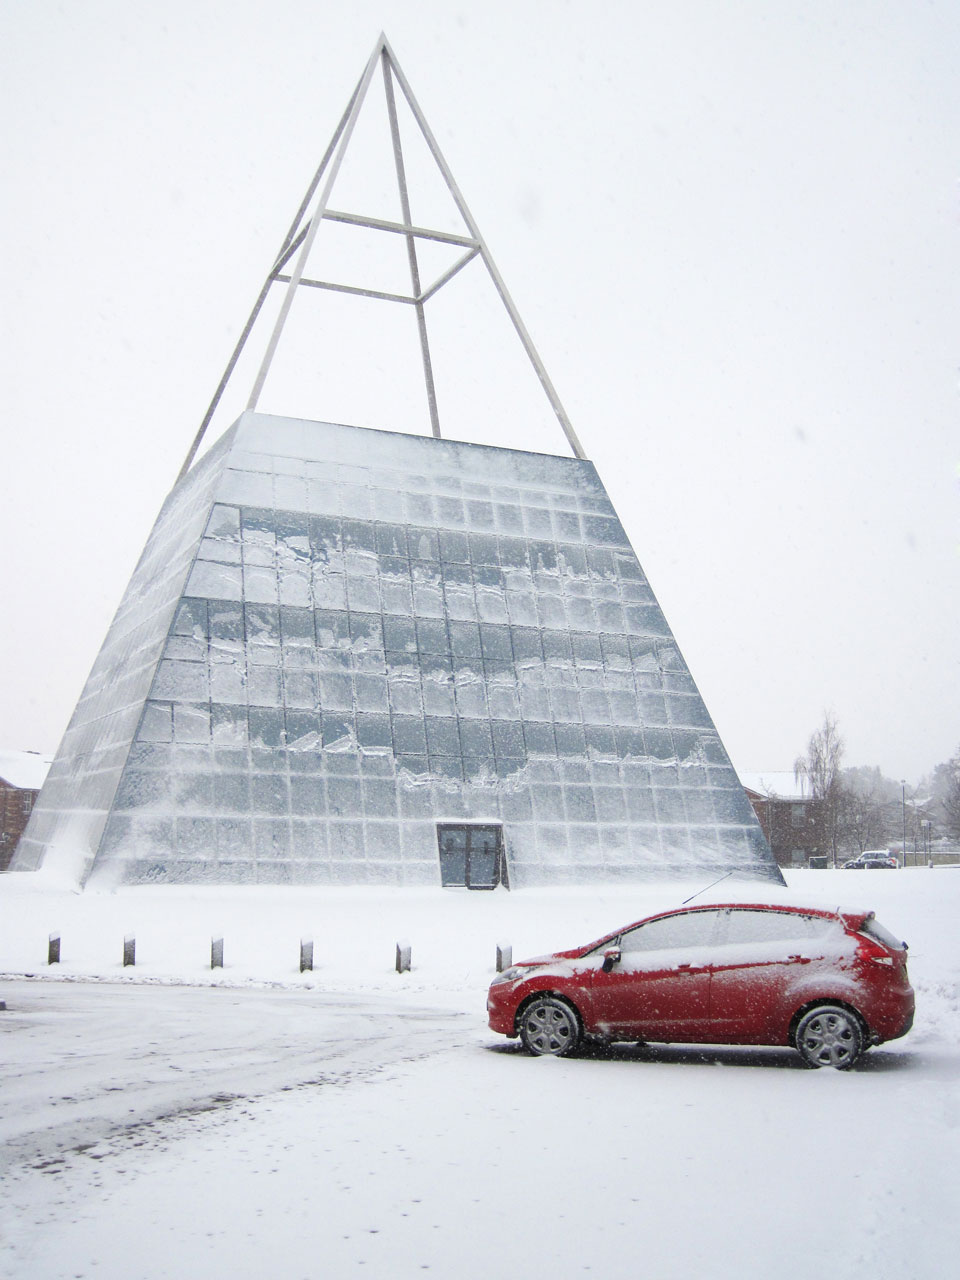 Pyramid In Winter